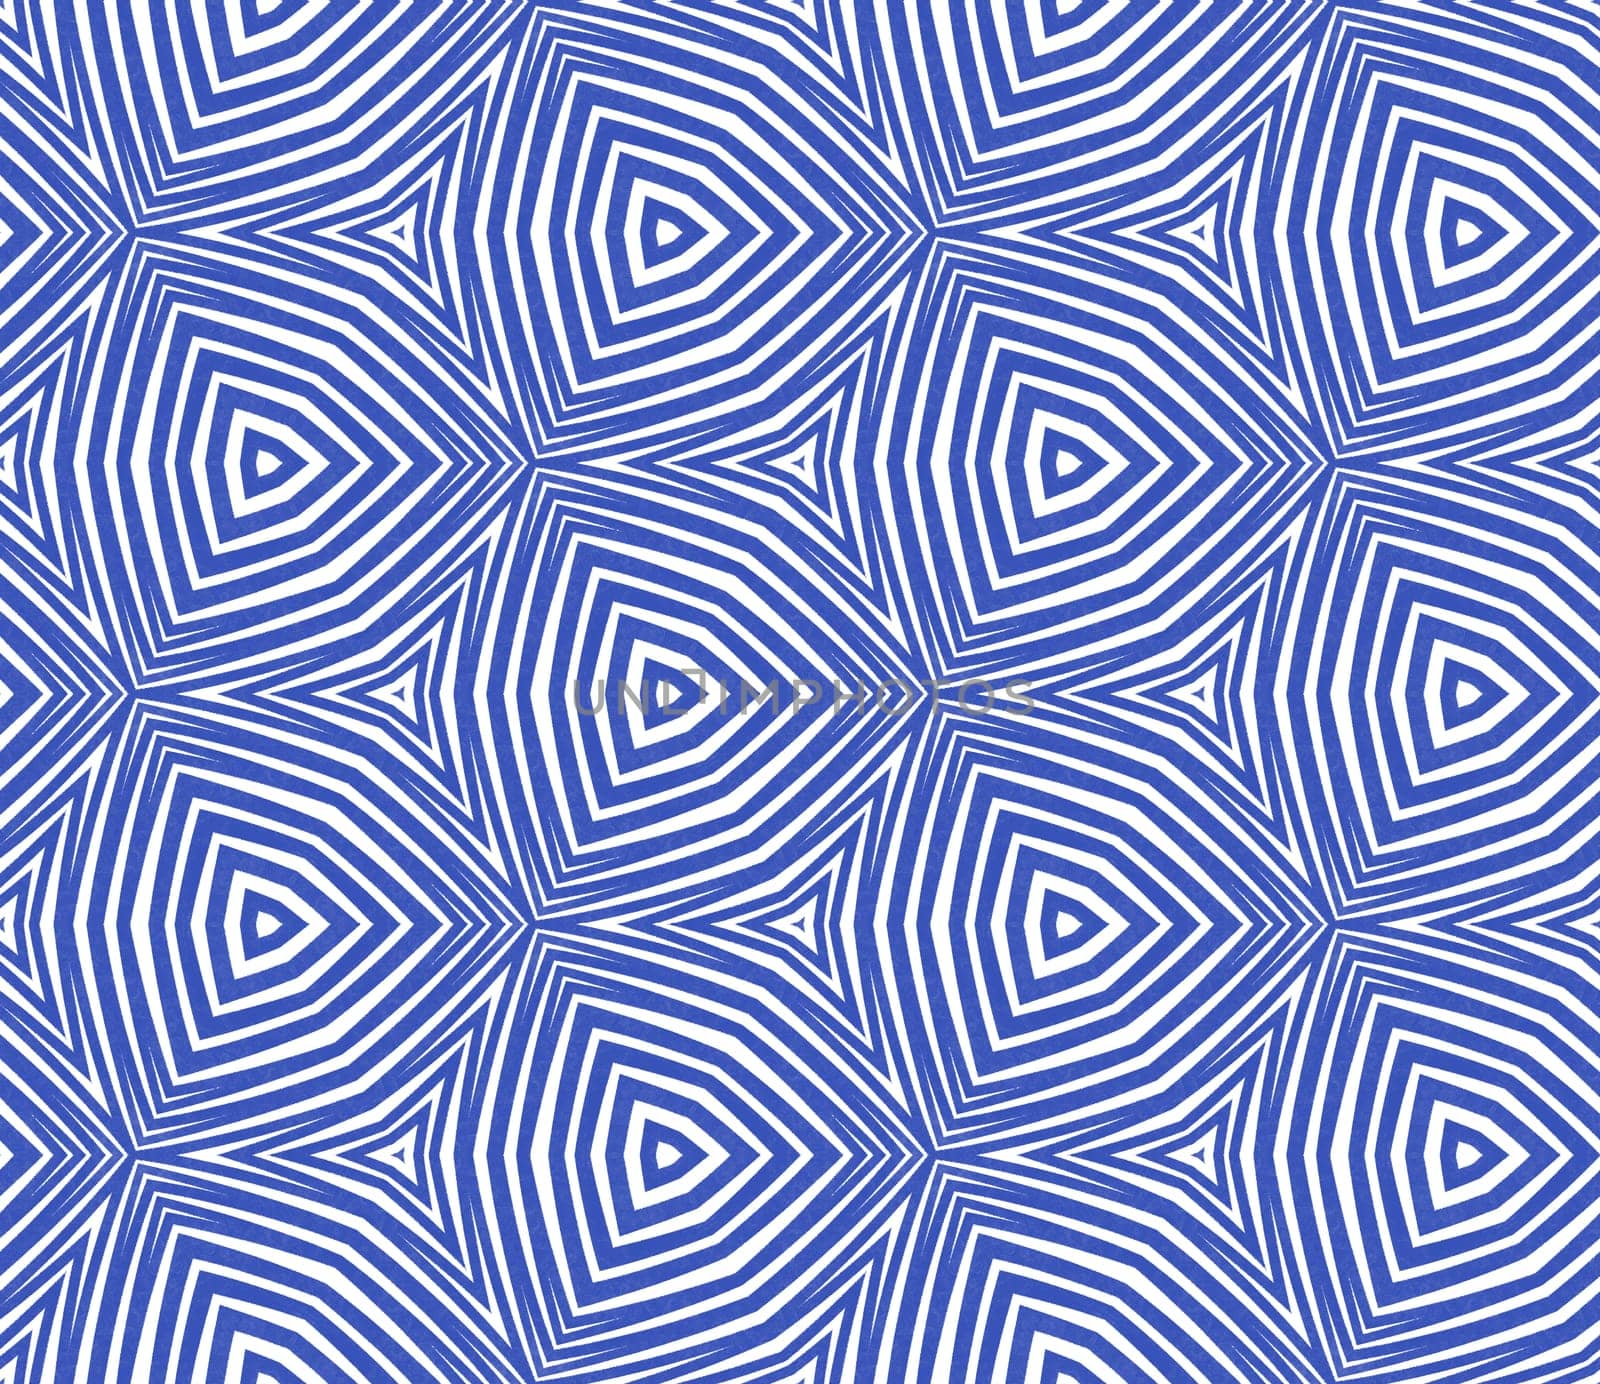 Chevron stripes design. Indigo symmetrical kaleidoscope background. Textile ready dazzling print, swimwear fabric, wallpaper, wrapping. Geometric chevron stripes pattern.